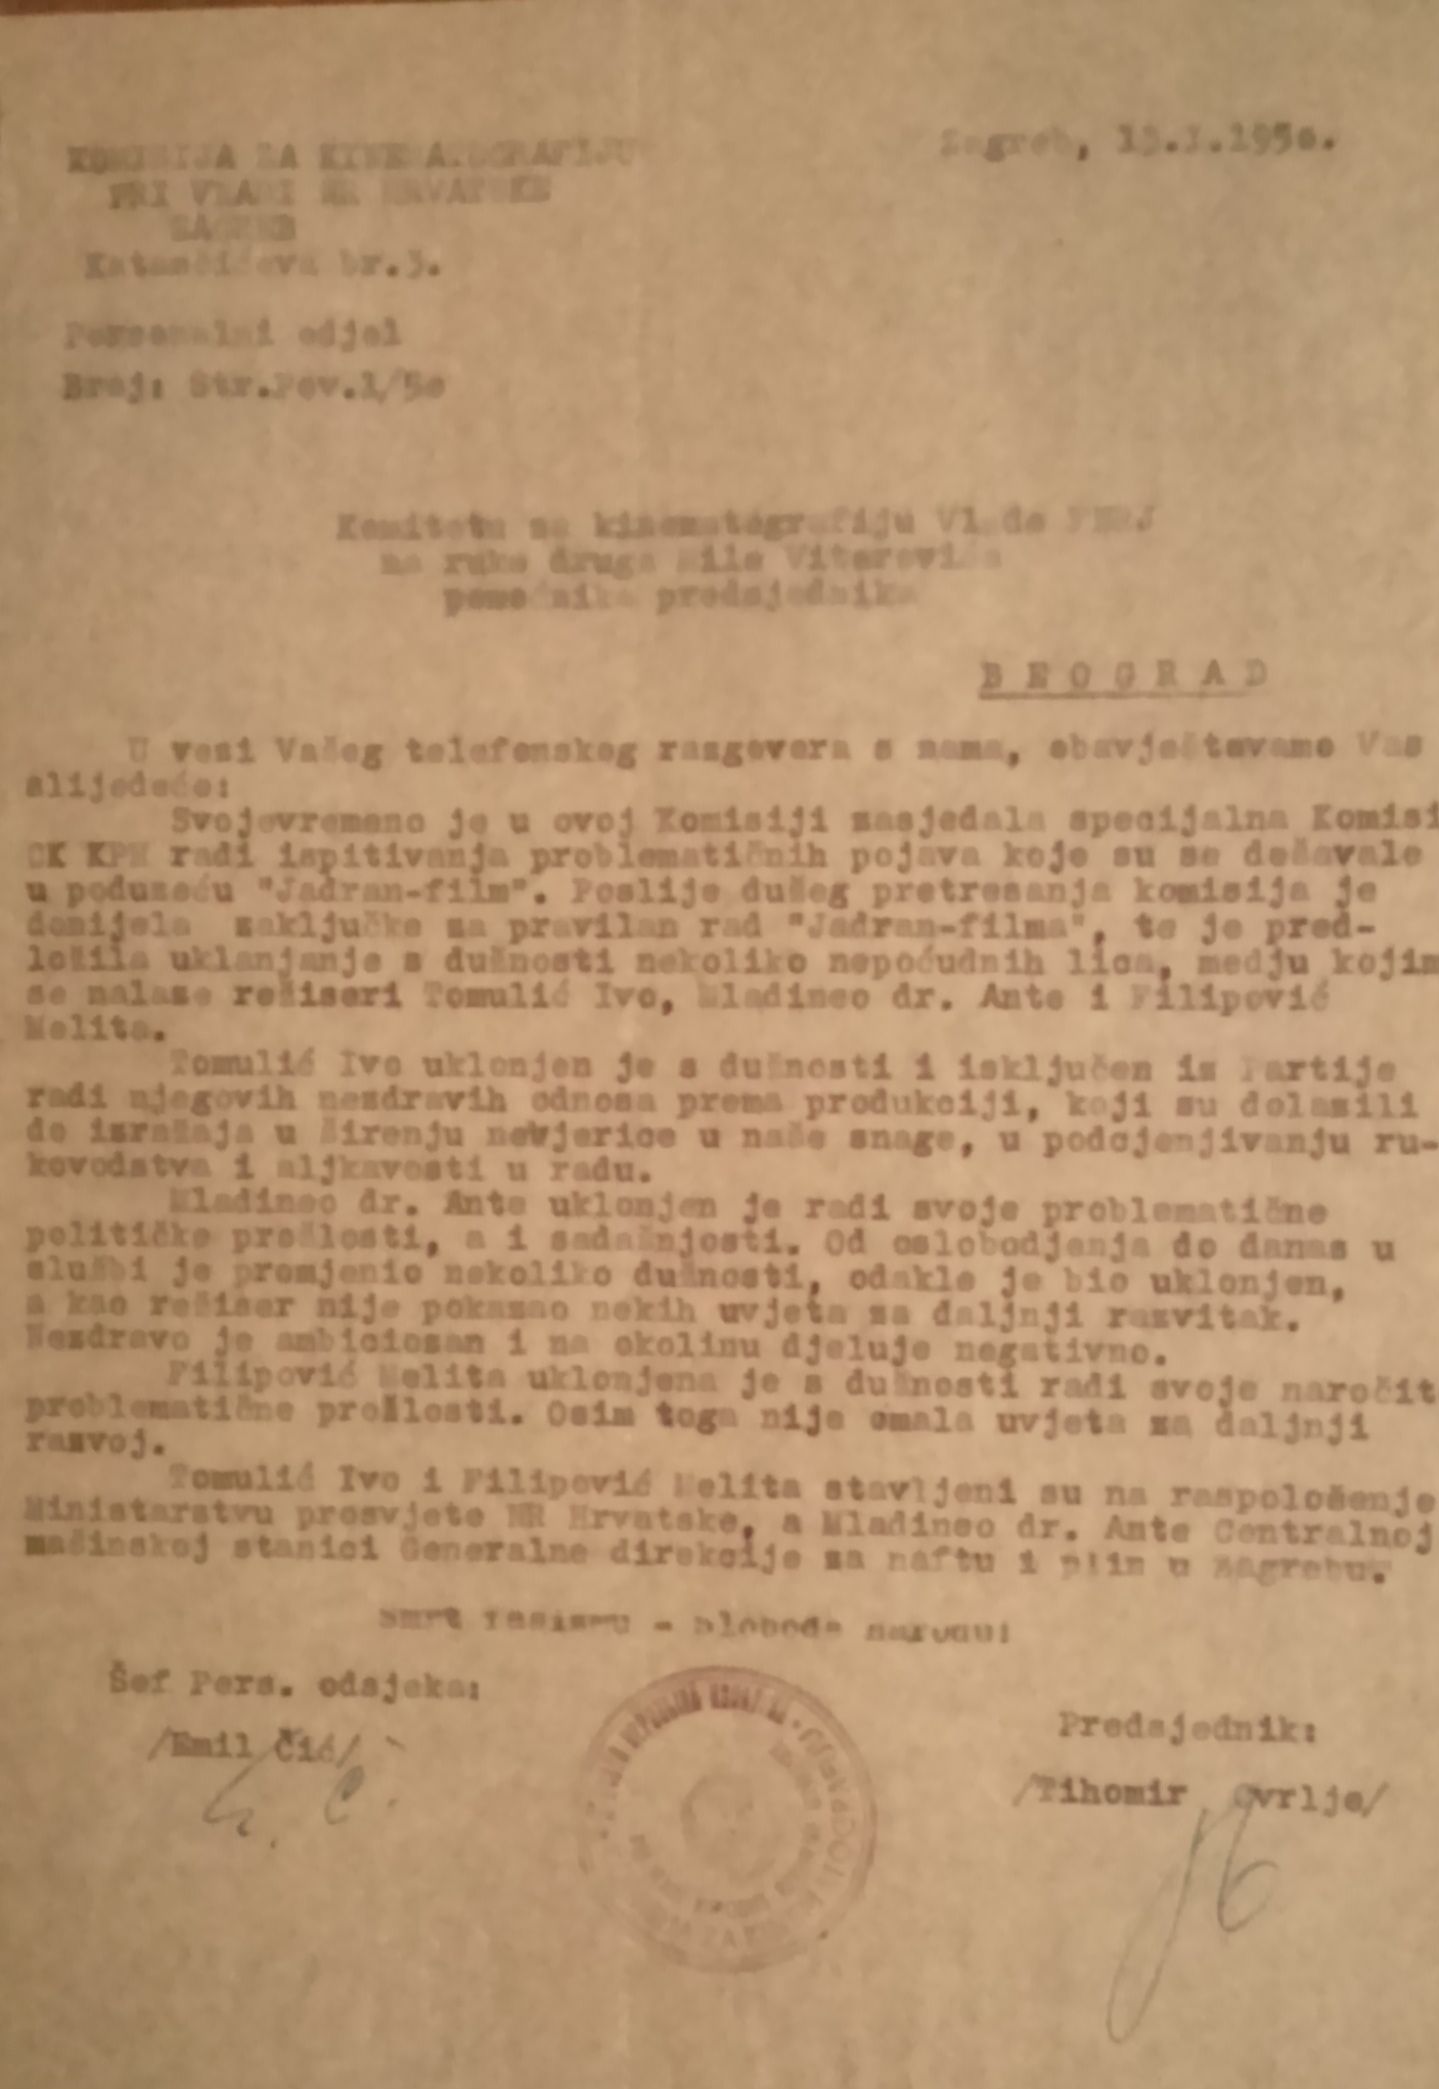 Information on oversight of Jadran film’s activities. 13 January 1950. Archival document